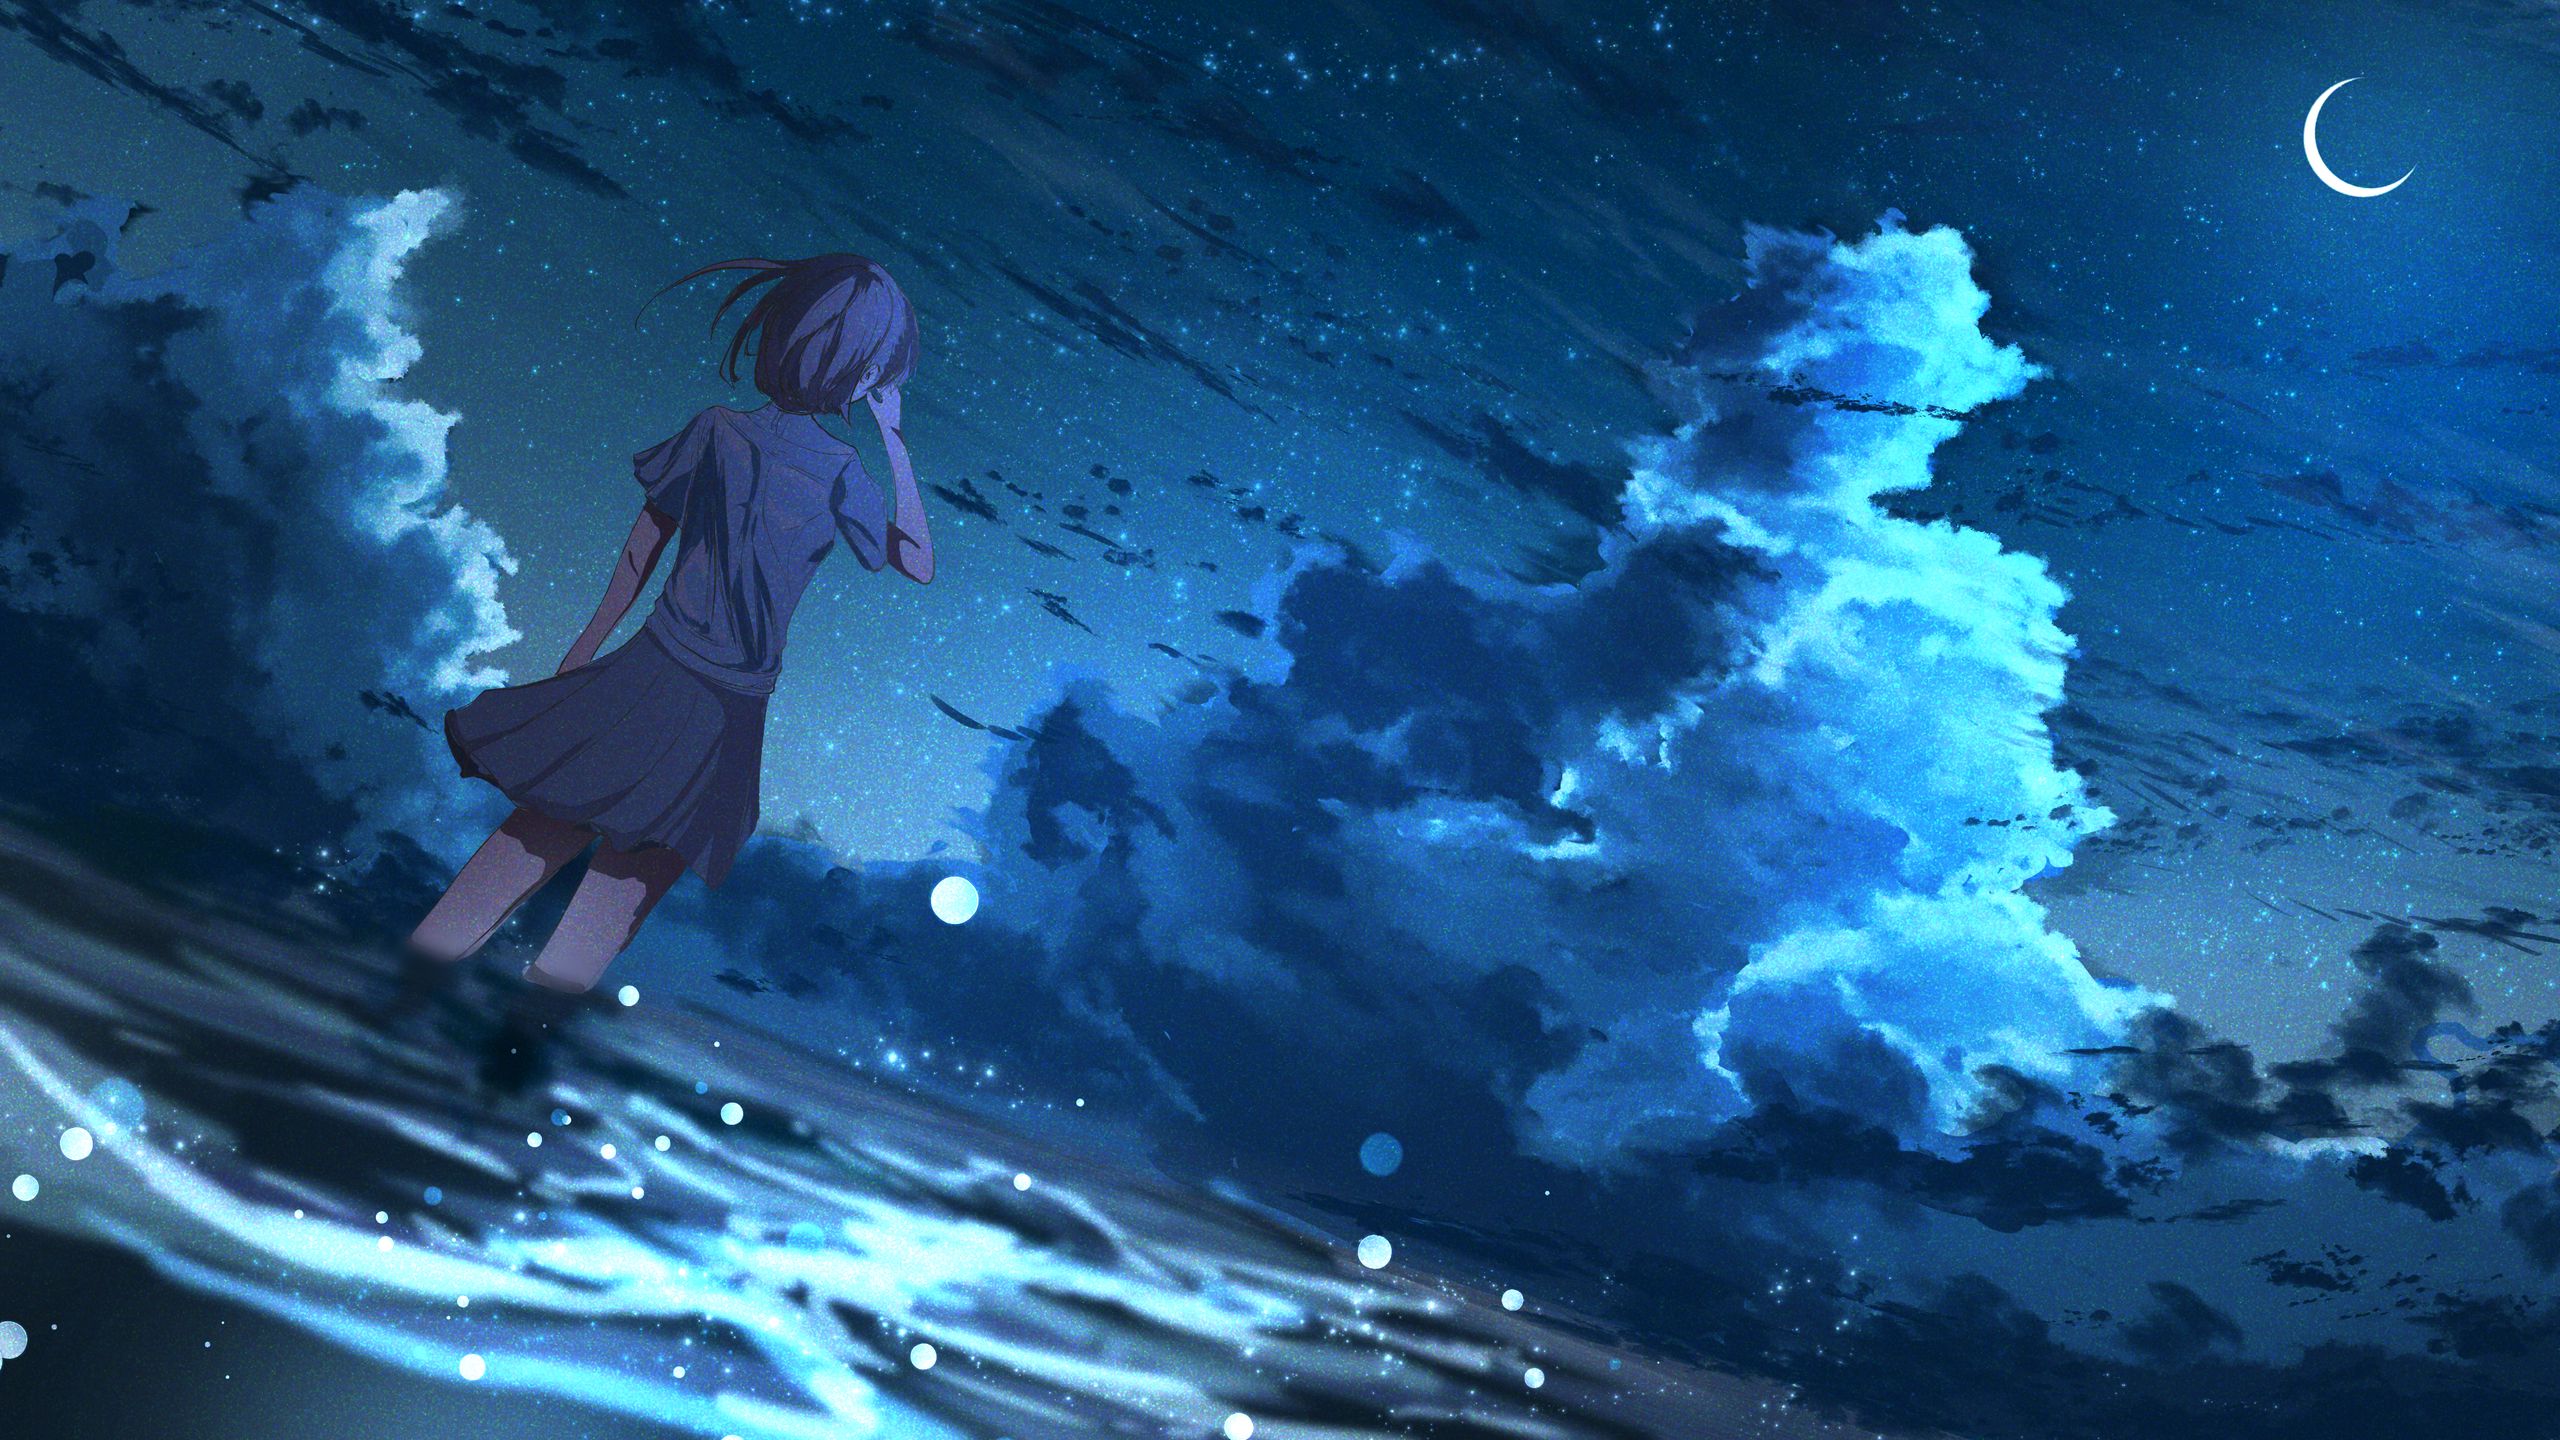 Download wallpaper 2560x1440 girl, anime, wind, night, stars, art  widescreen 16:9 hd background